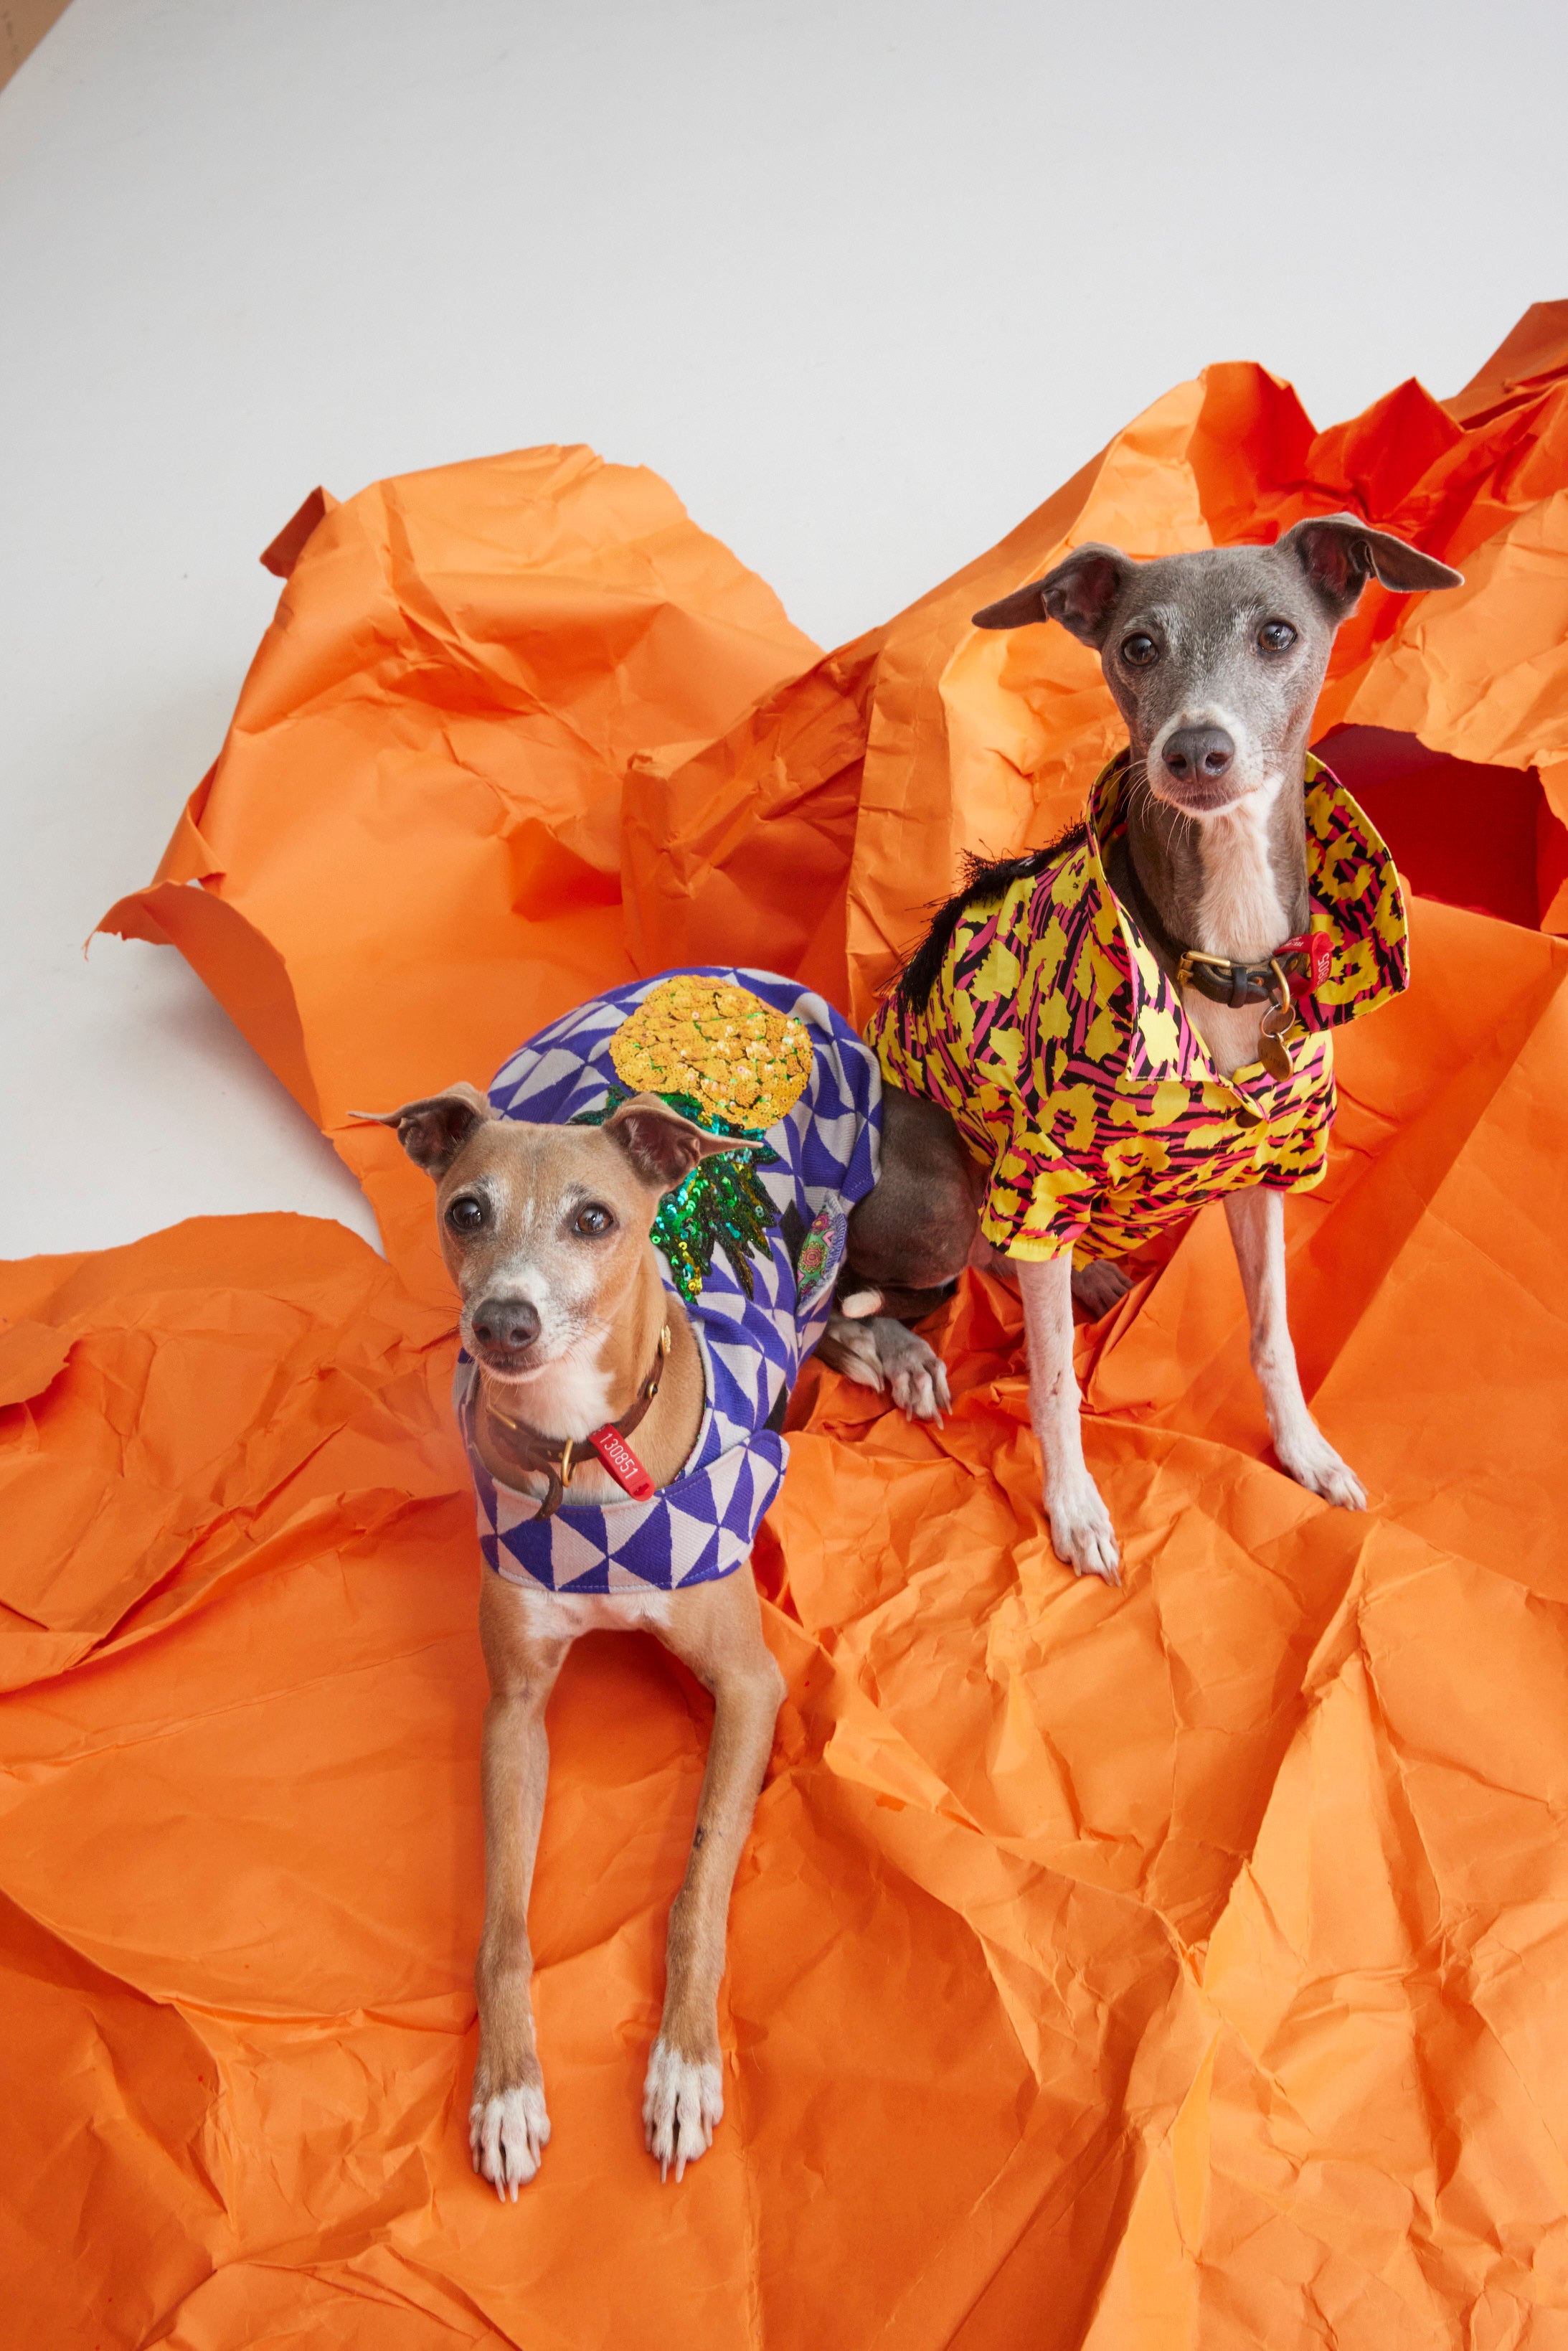 WORLD Loves Mr.Soft Top Dog Dress Shirt - Electric Animal Print